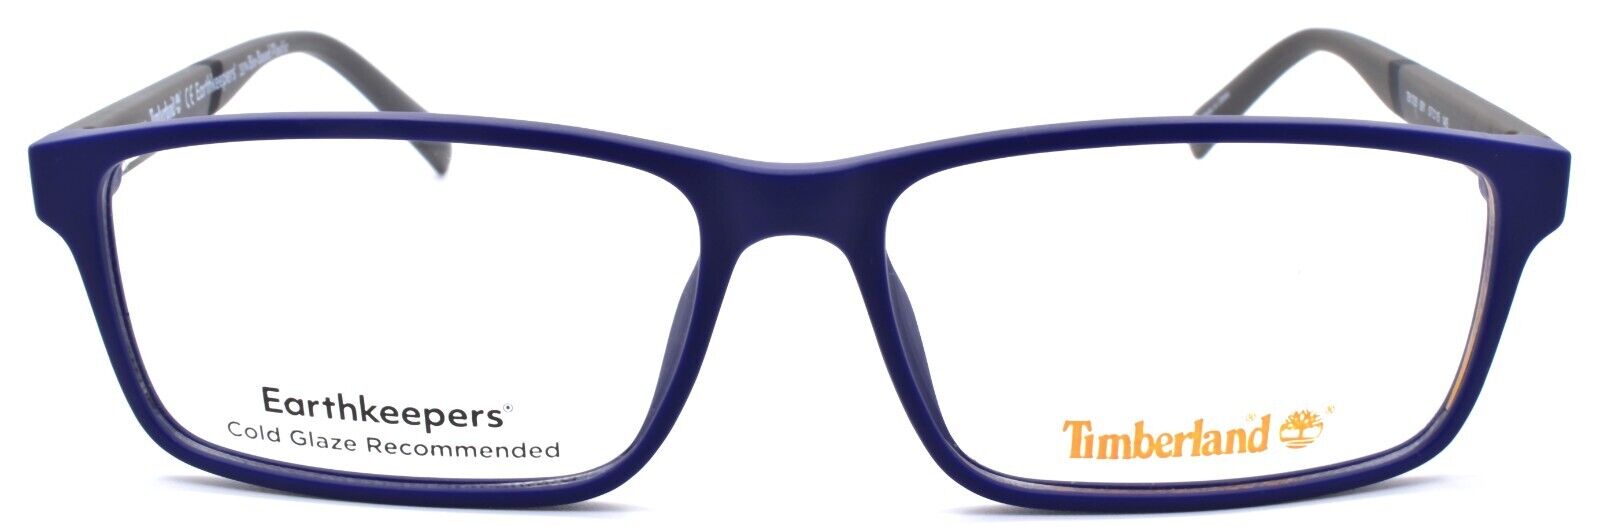 2-TIMBERLAND TB1705 091 Men's Eyeglasses Frames 57-15-145 Matte Blue-889214212535-IKSpecs